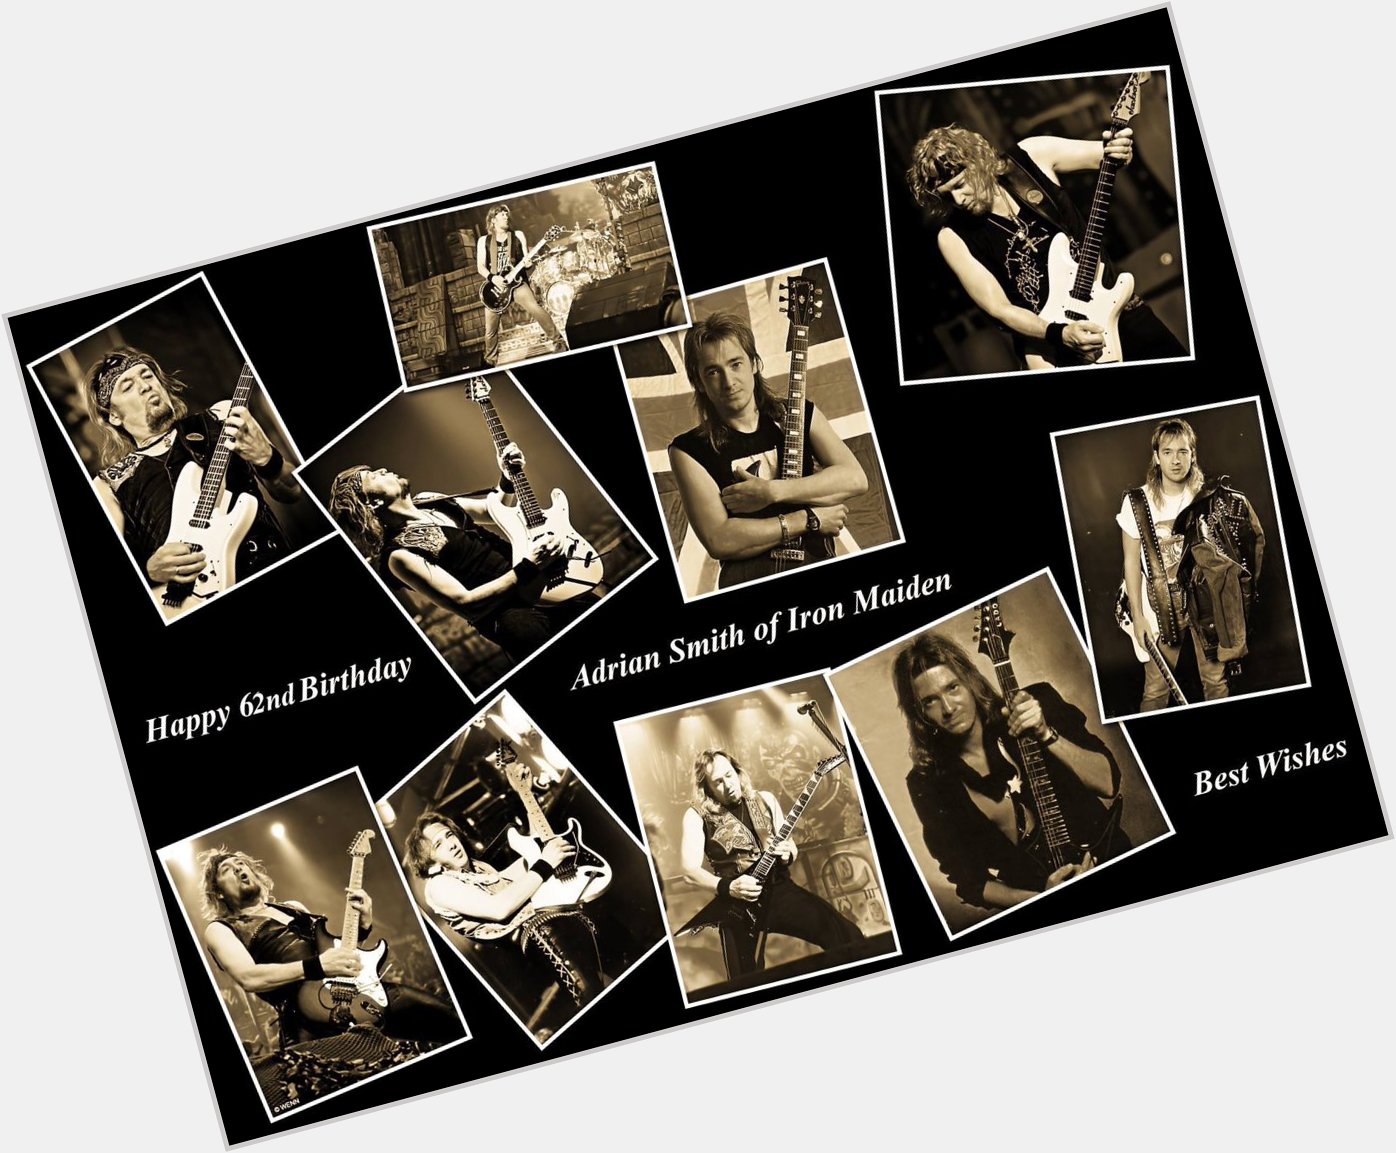 Happy 62nd Birthday & Best Wishes to Adrian Smith of Iron Maiden 